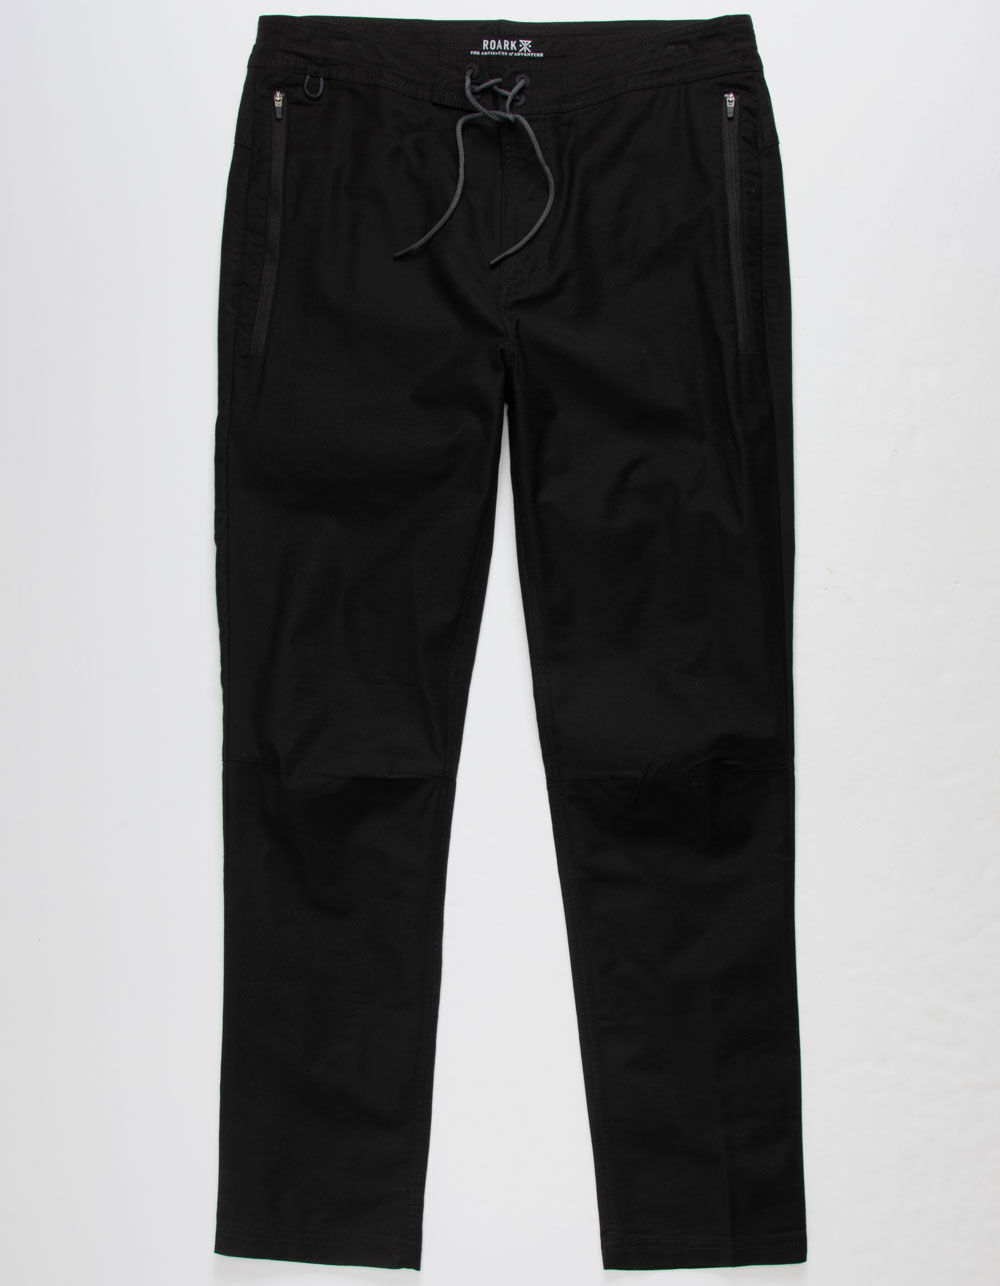 Layover 2.0 Pants - Black – Roark